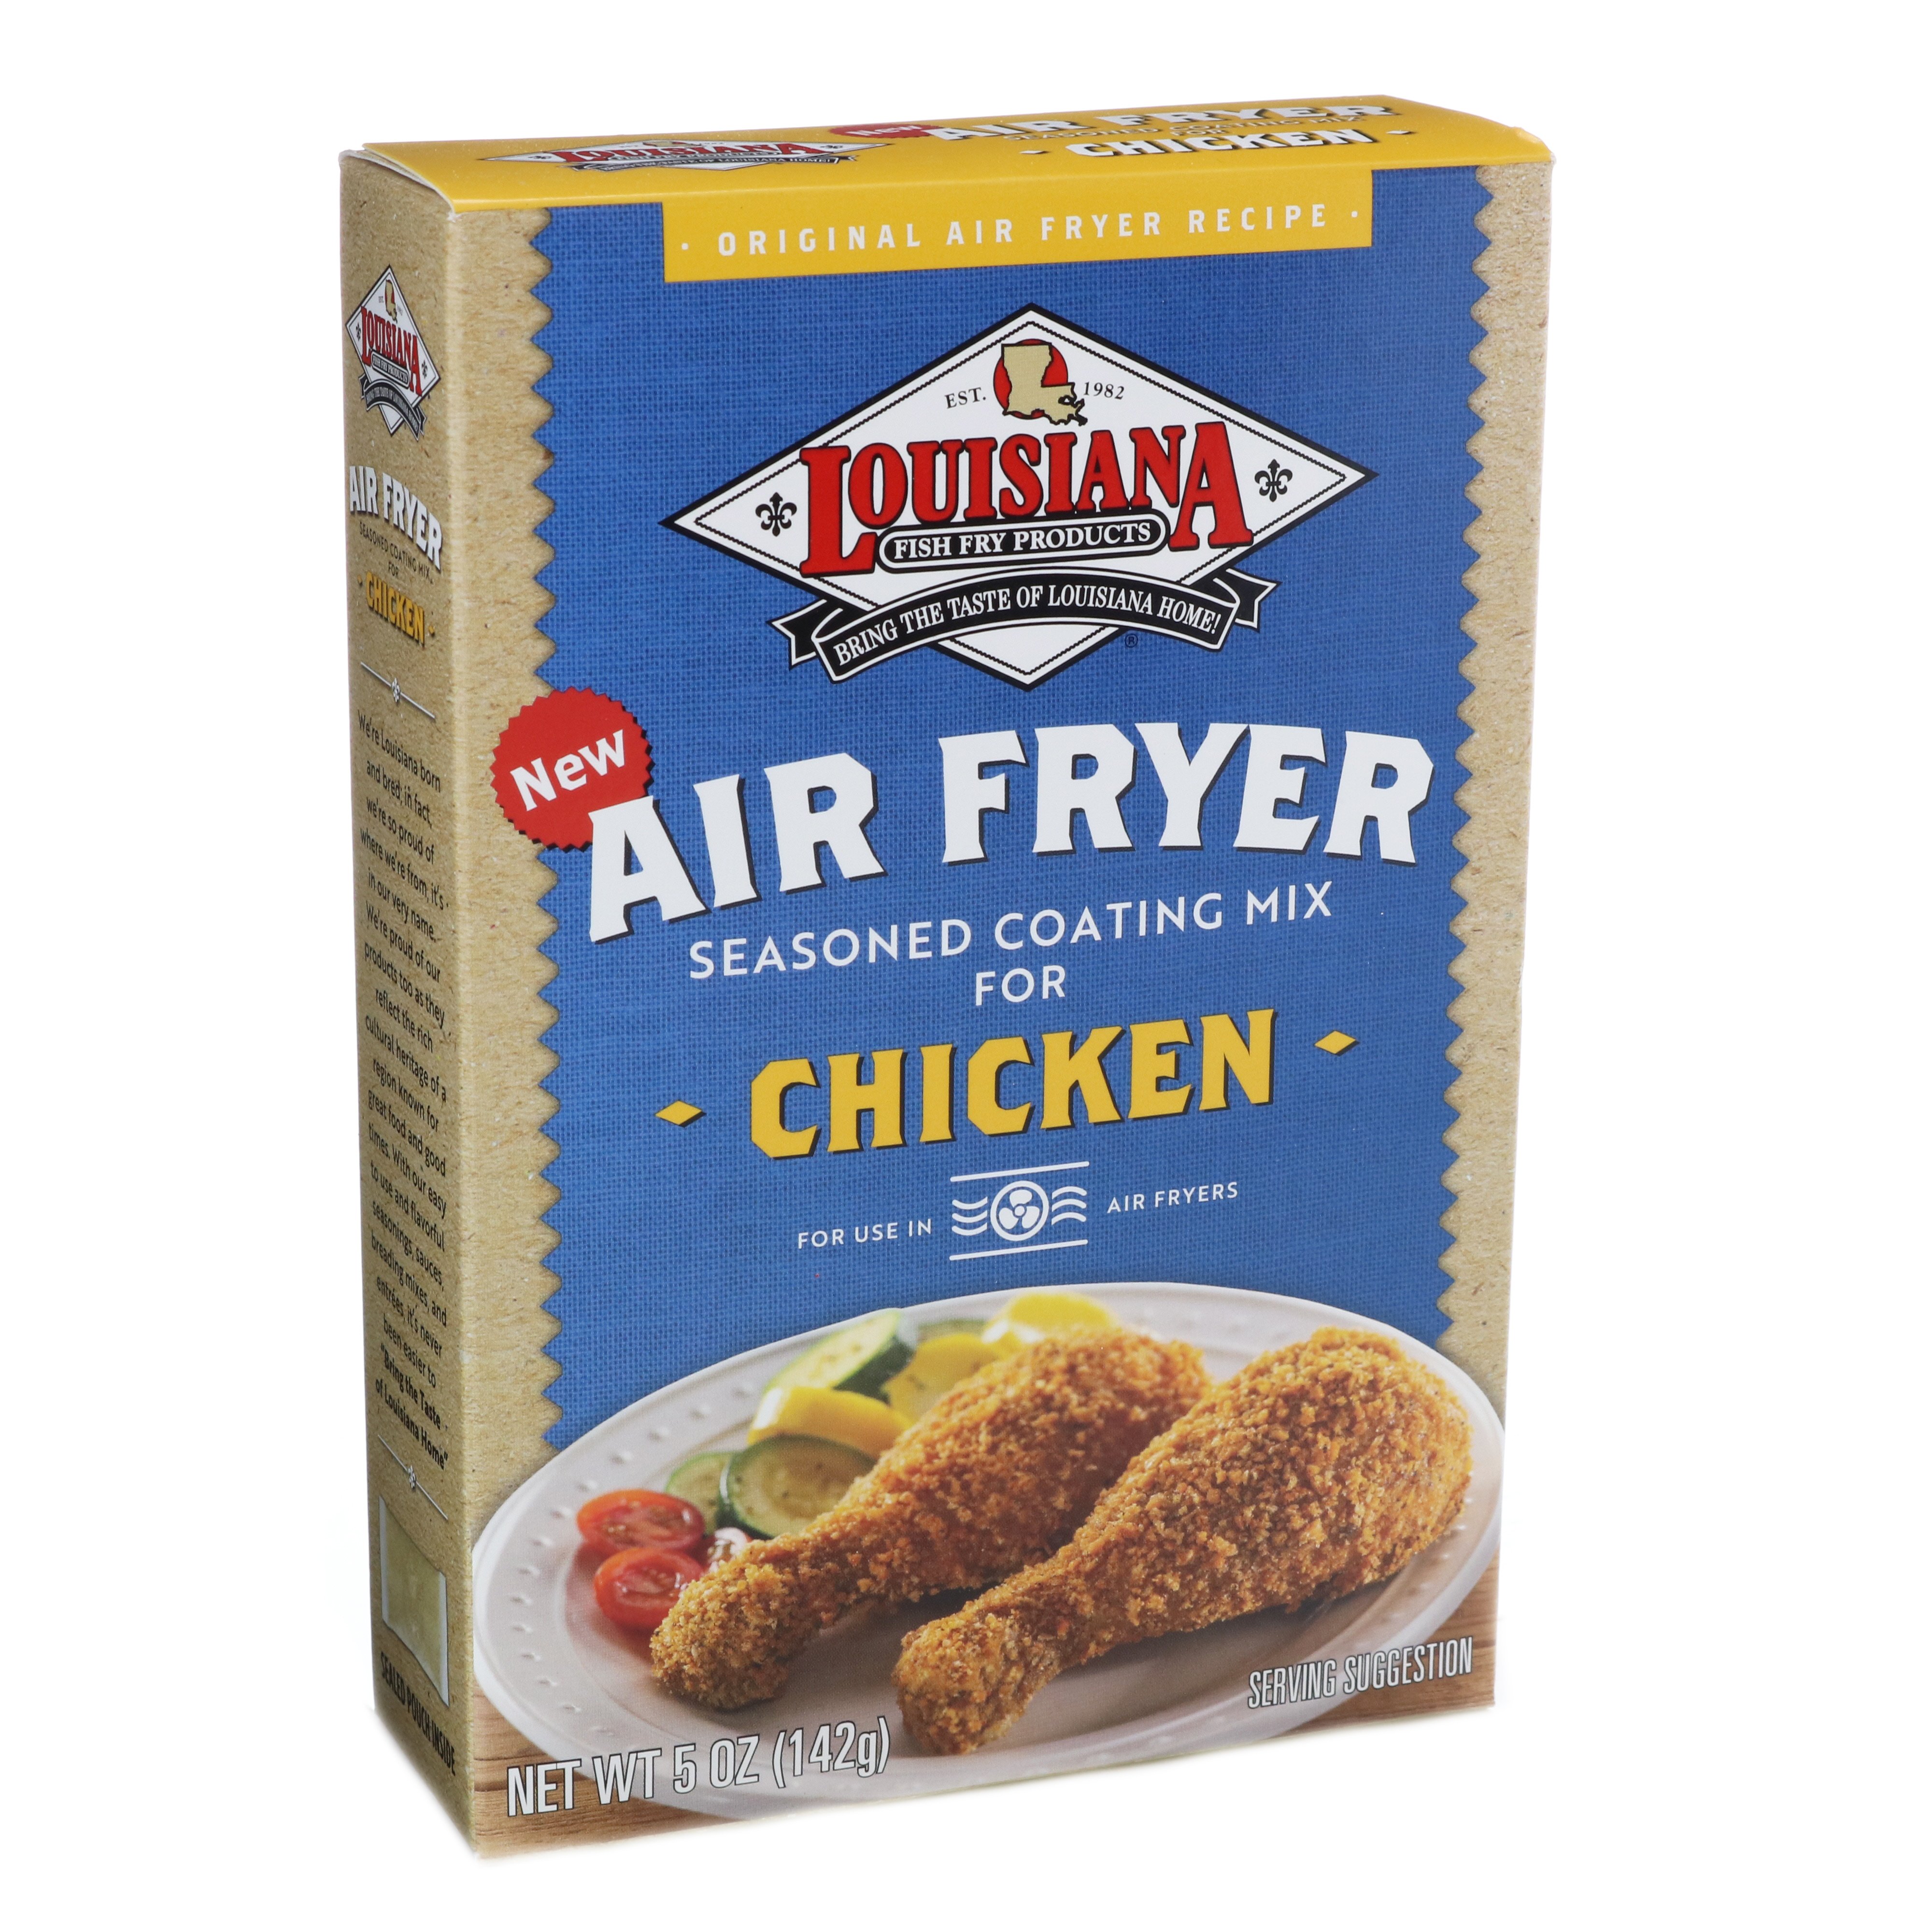 Louisiana Fish Fry Products Chicken Batter Mix, Chicken Fry, Seasoned - 9 oz